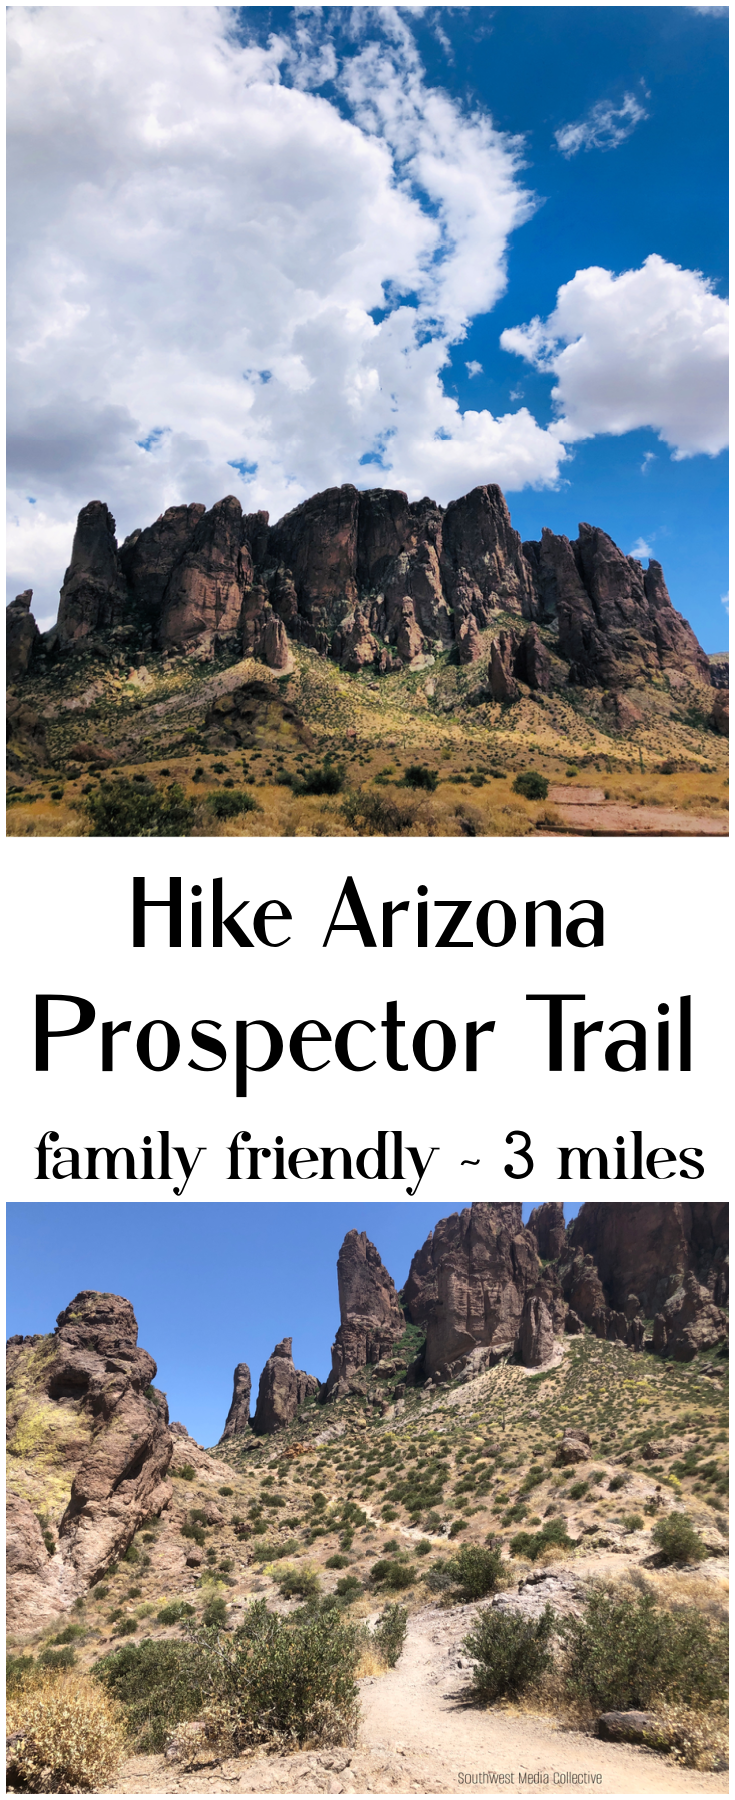 Prospector Trail, Arizona